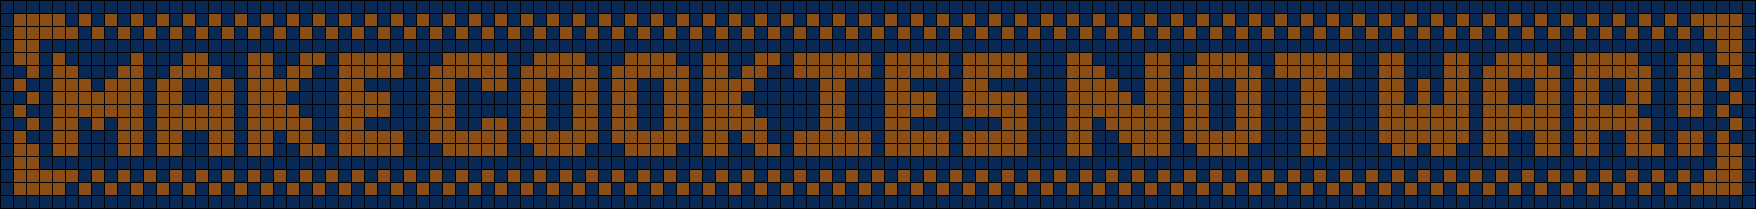 Alpha pattern #4375 variation #1857 preview